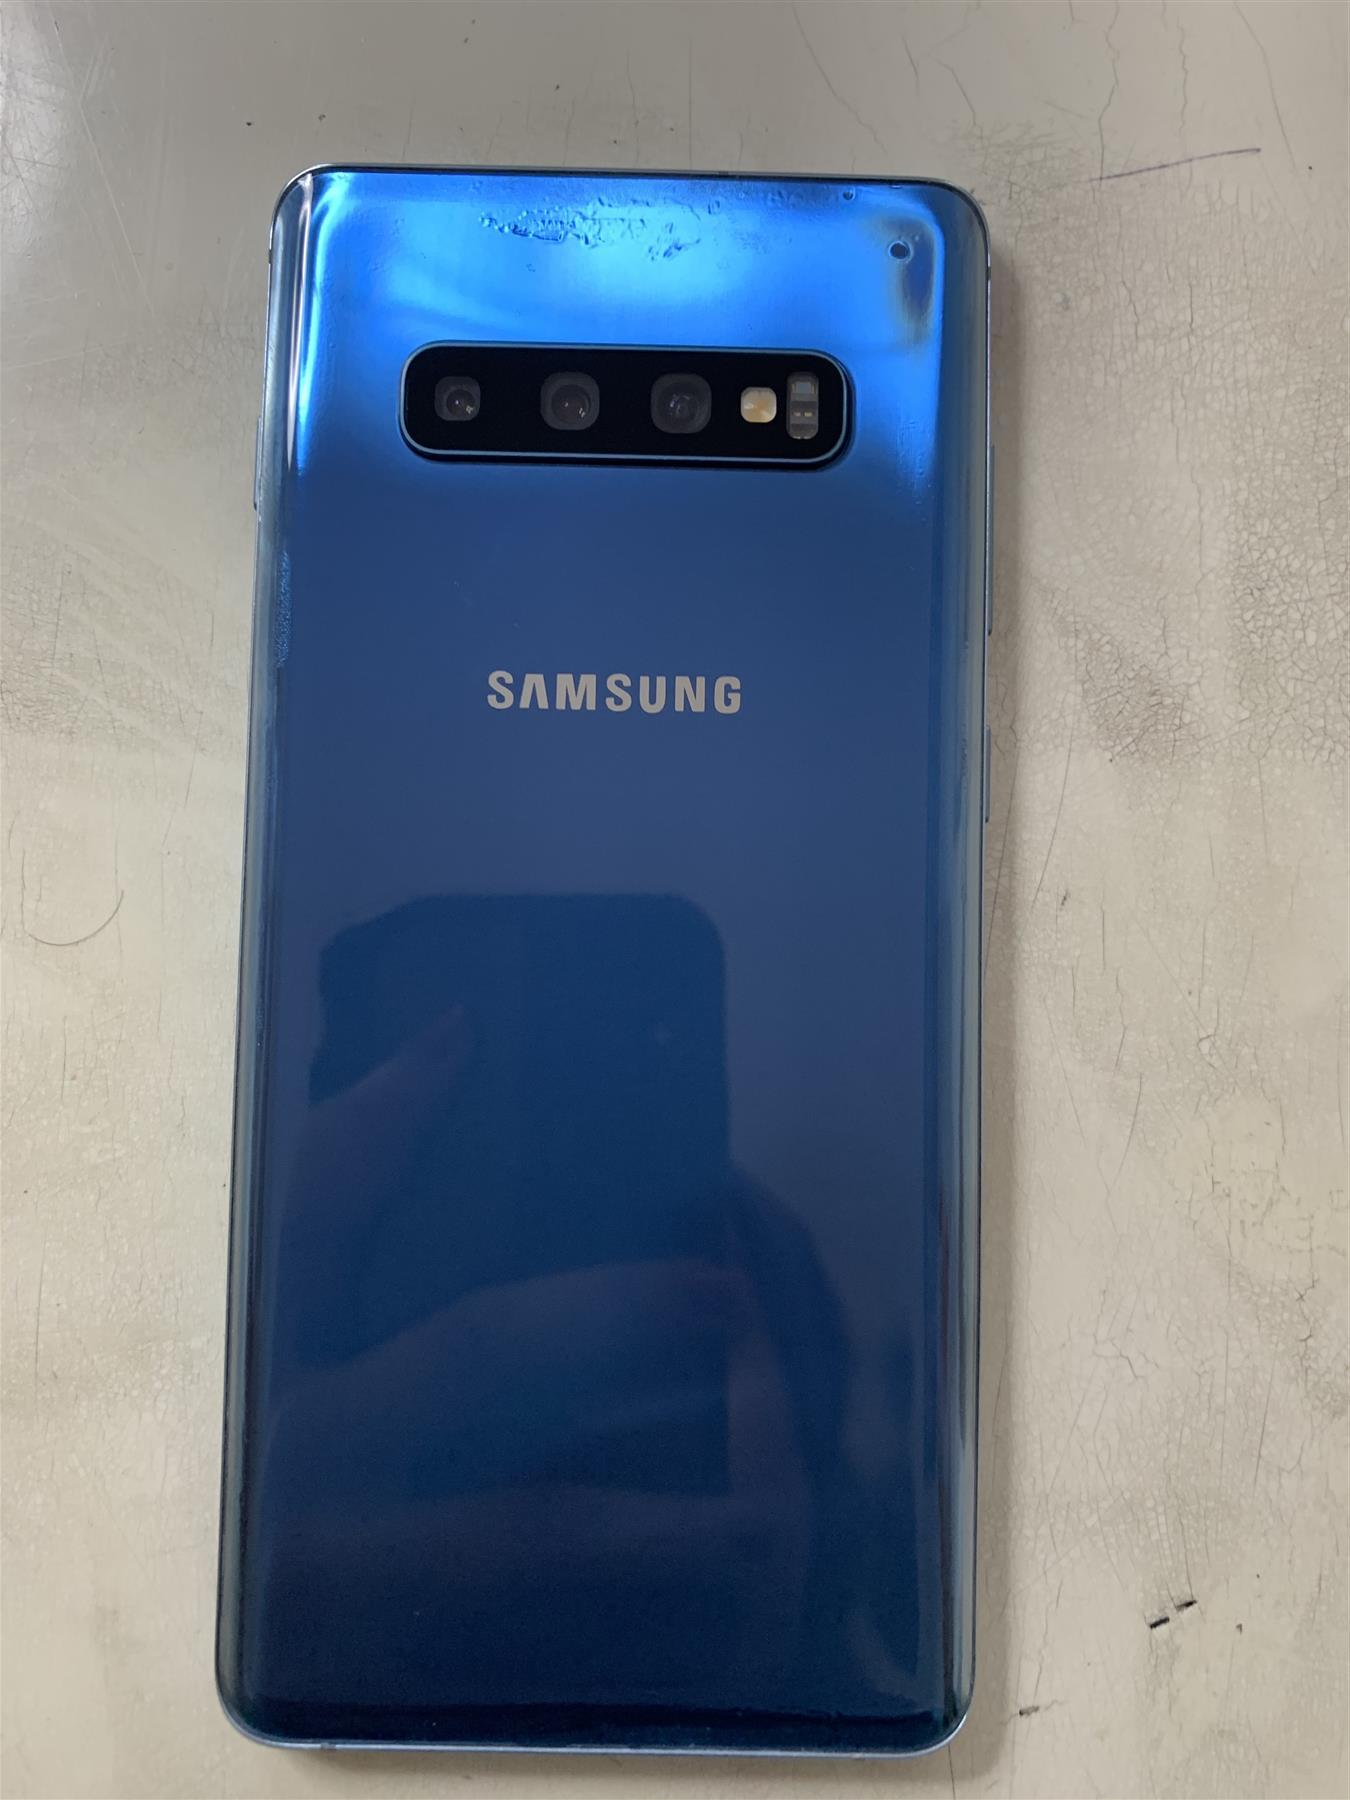 Samsung Galaxy S10 Plus 512GB Blue - Used